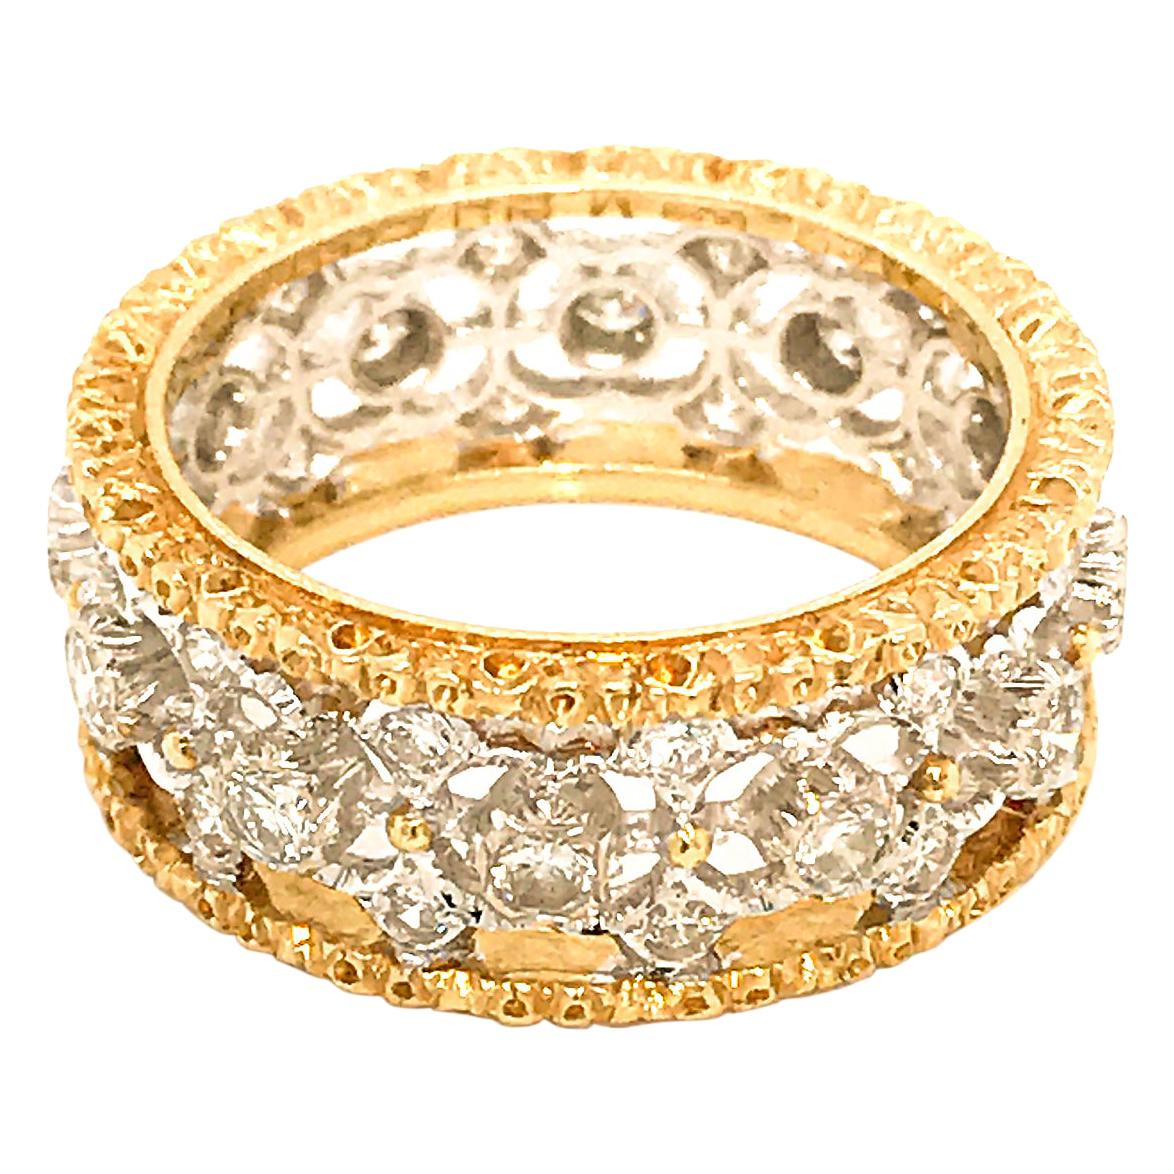 Mario Buccellati 18 Karat Yellow and White Gold Diamond Ring